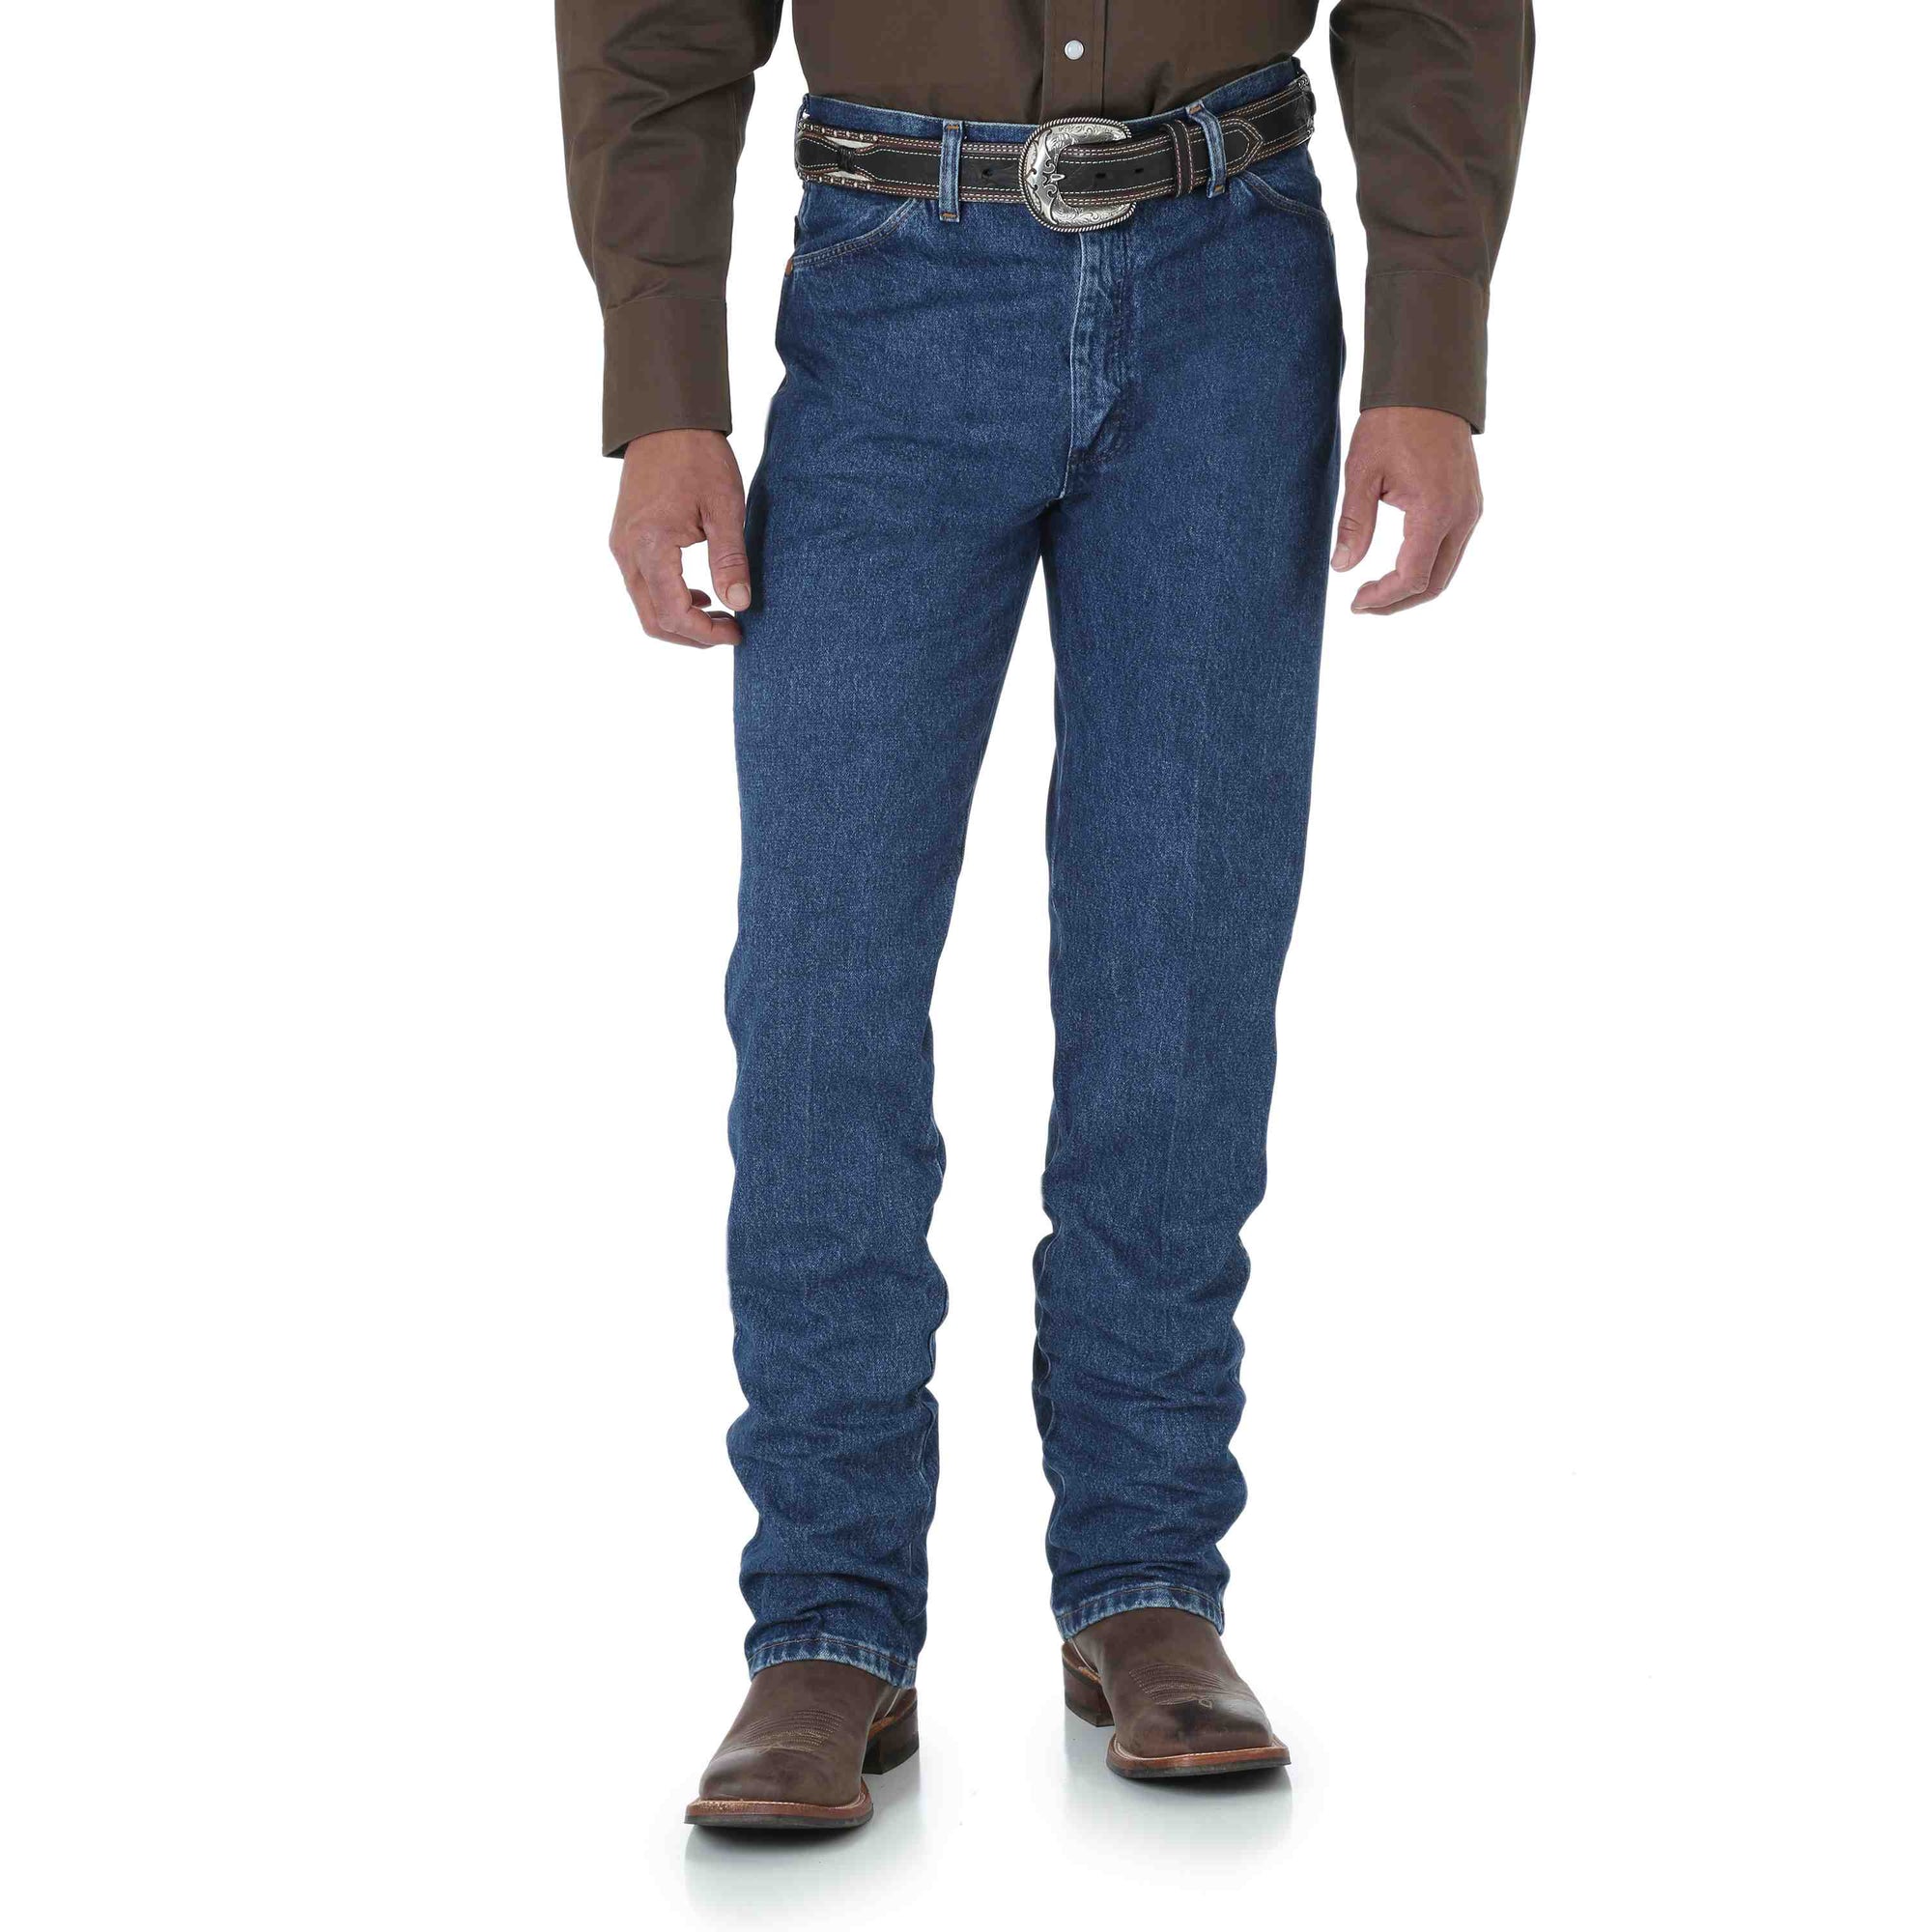 Wrangler Jeans Wrangler Men's Stonewashed Cowboy Cut Slim Fit Jeans 936GBK